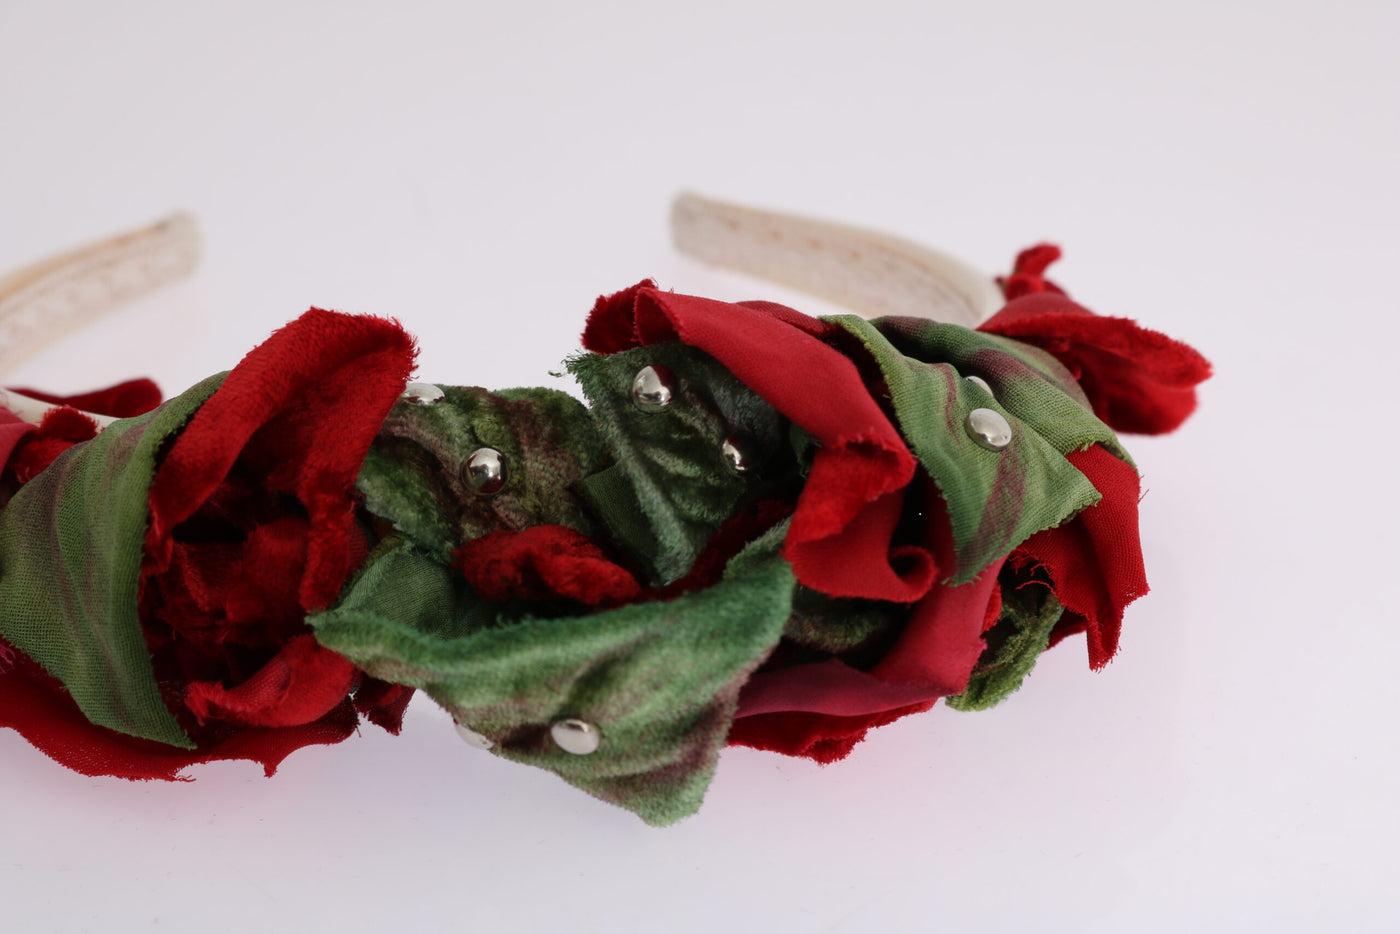 Dolce & Gabbana Multicolor Floral Roses Beaded Tiara Diadem